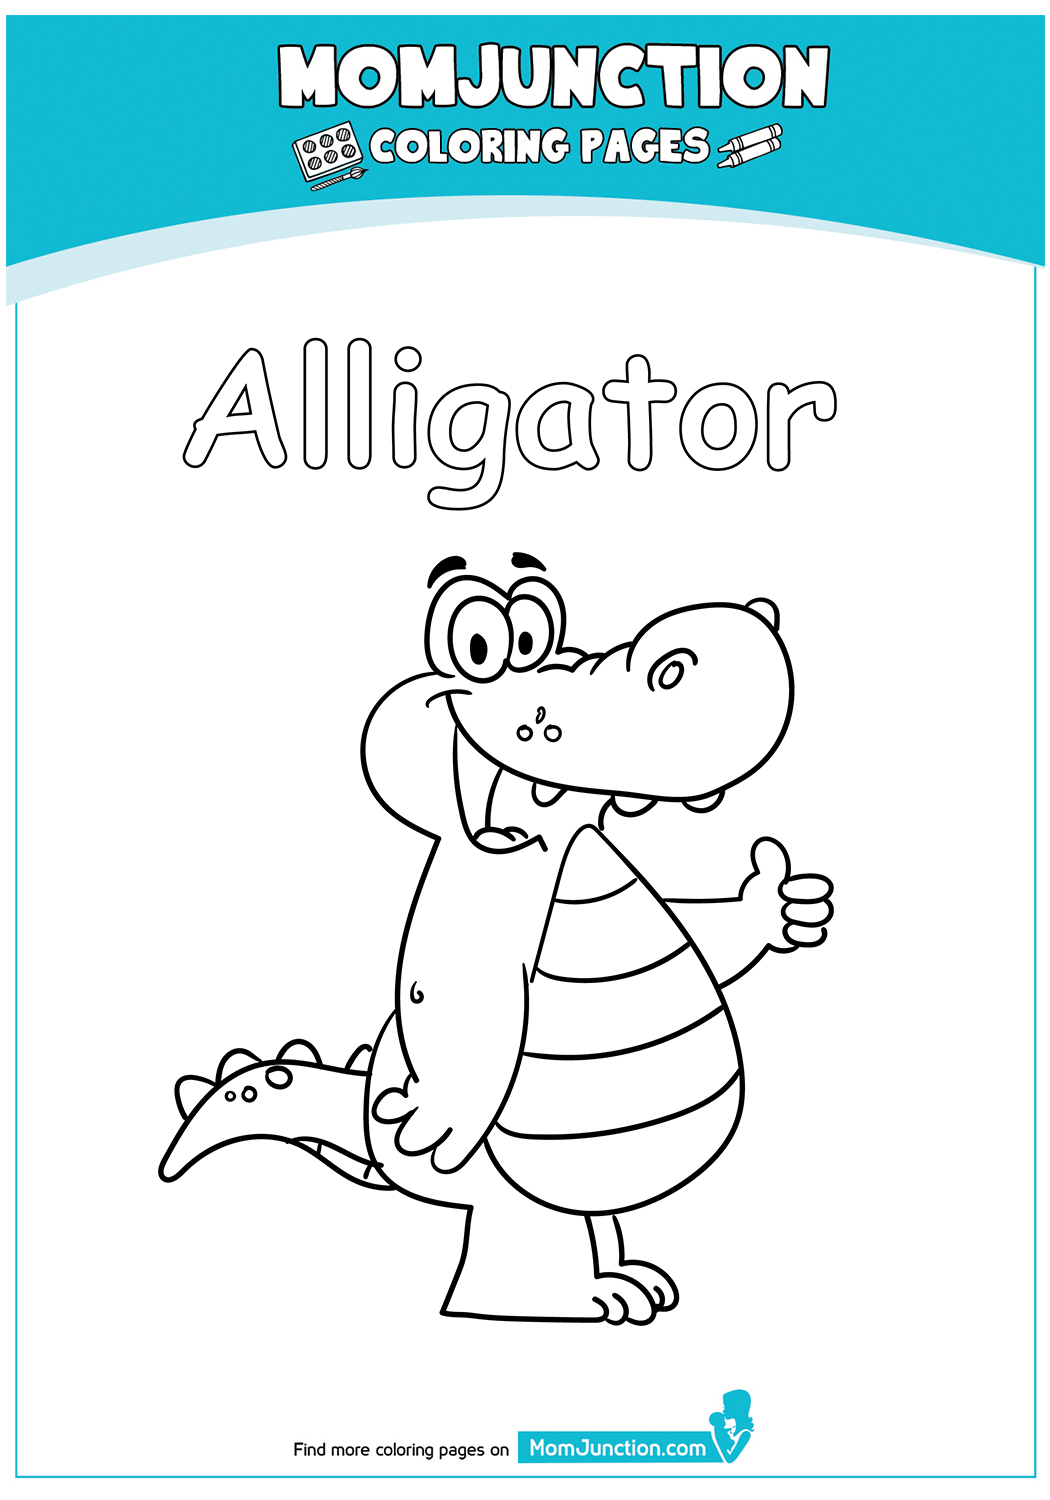 The-happy-alligator-dance-17